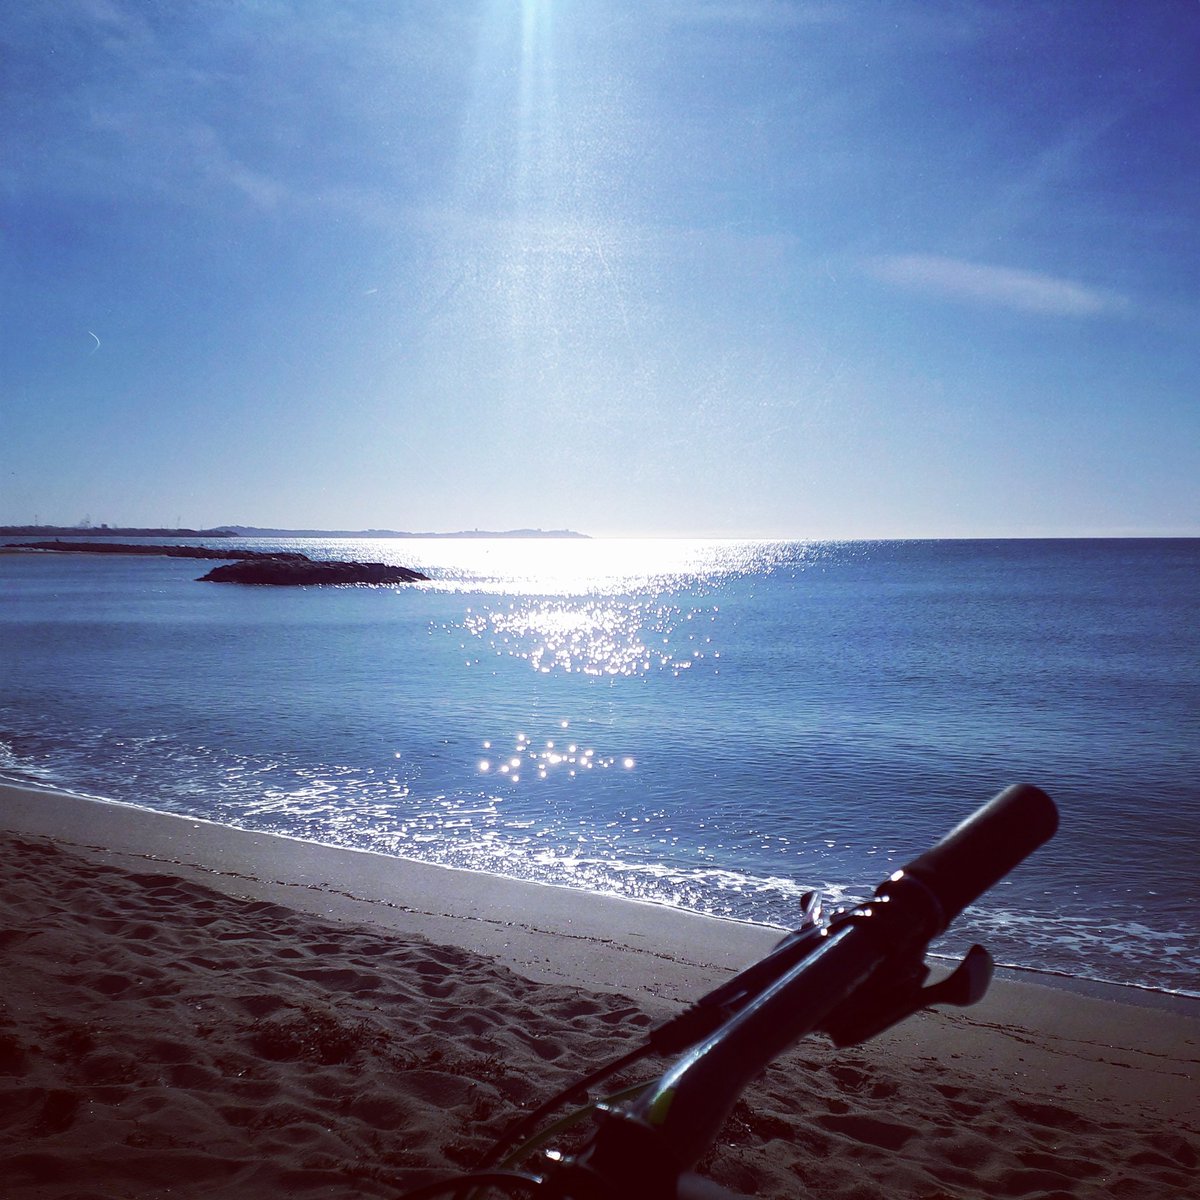 Blue day... #blue #blueday #cambrils #cambrilsturisme #mtblife #mtb #mtbiking #beach #platja #sand #arena #cyclinglife #cycling #cyclelife #cycle #cannondale #naturephotography #naturelight #natura #naturelovers #sea #mar #reflex #reflection #sol #sunreflection #sun